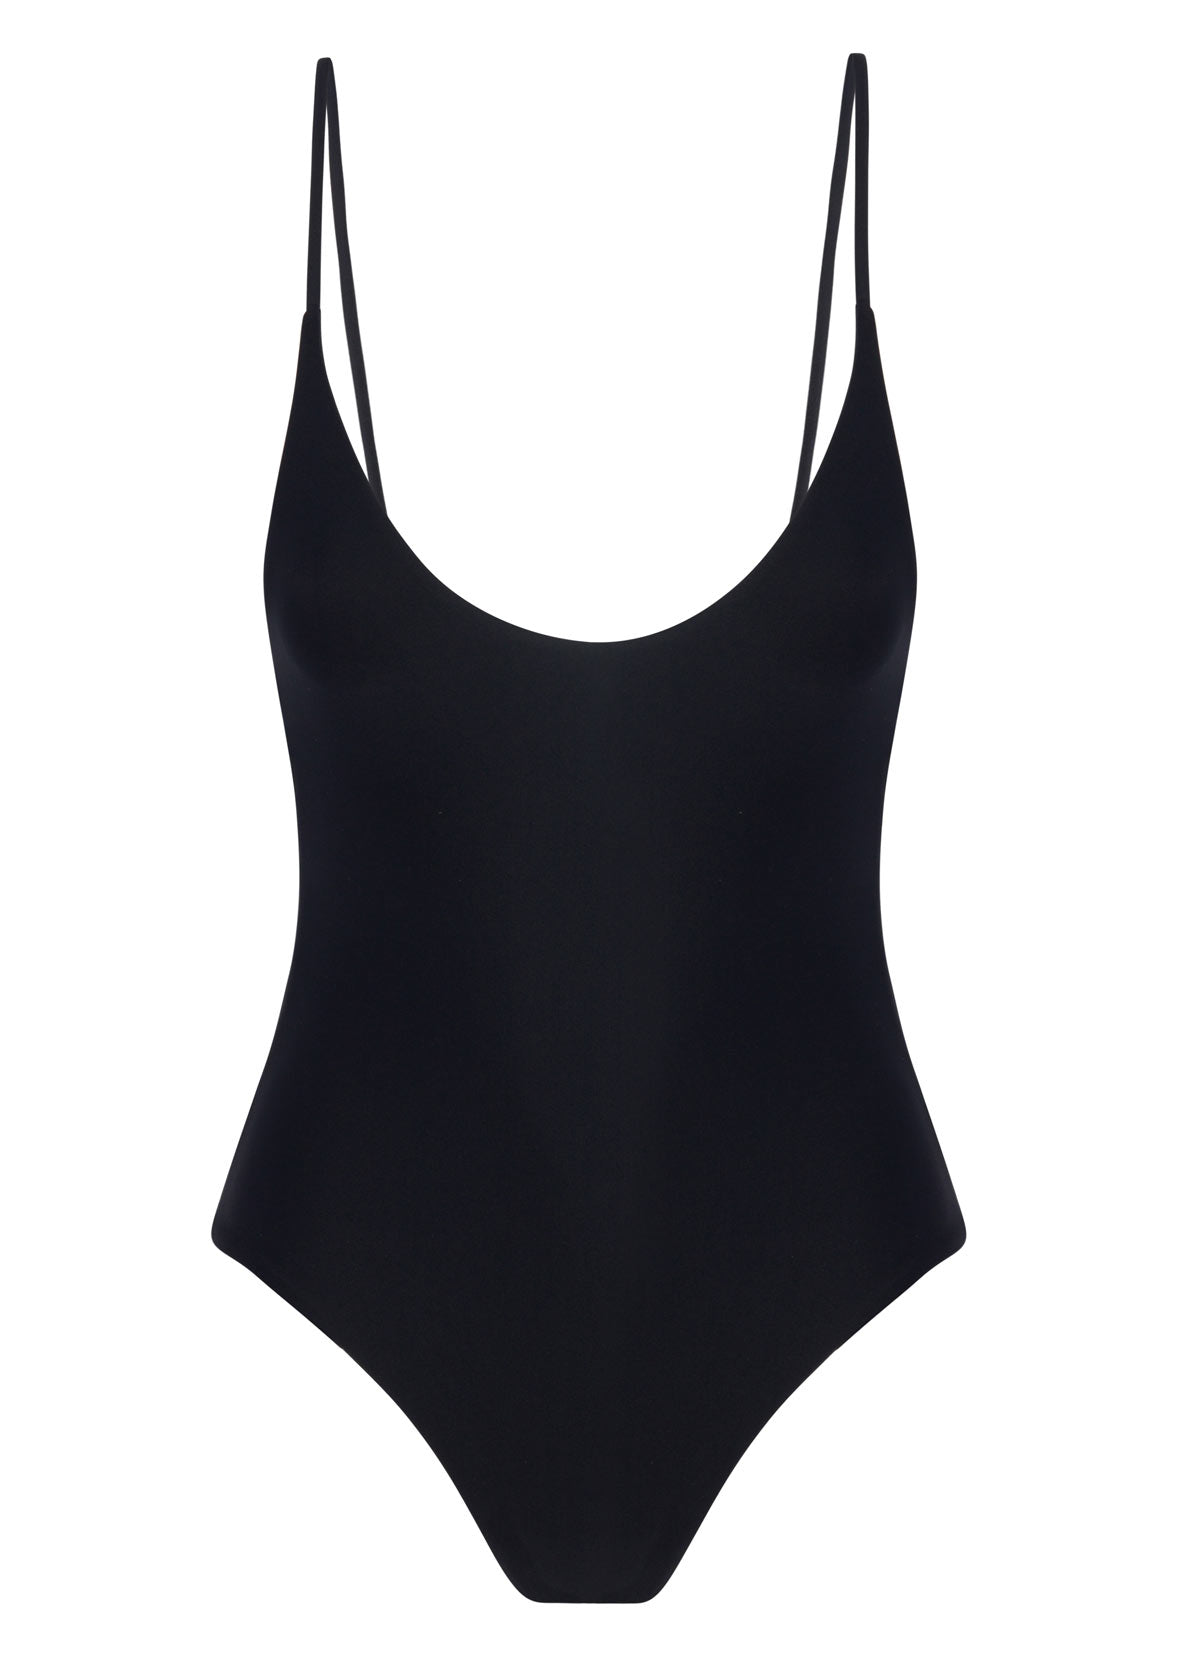 Sands Maillot - Black - Sands Swim - Black One-Piece Maillot Swimsuit